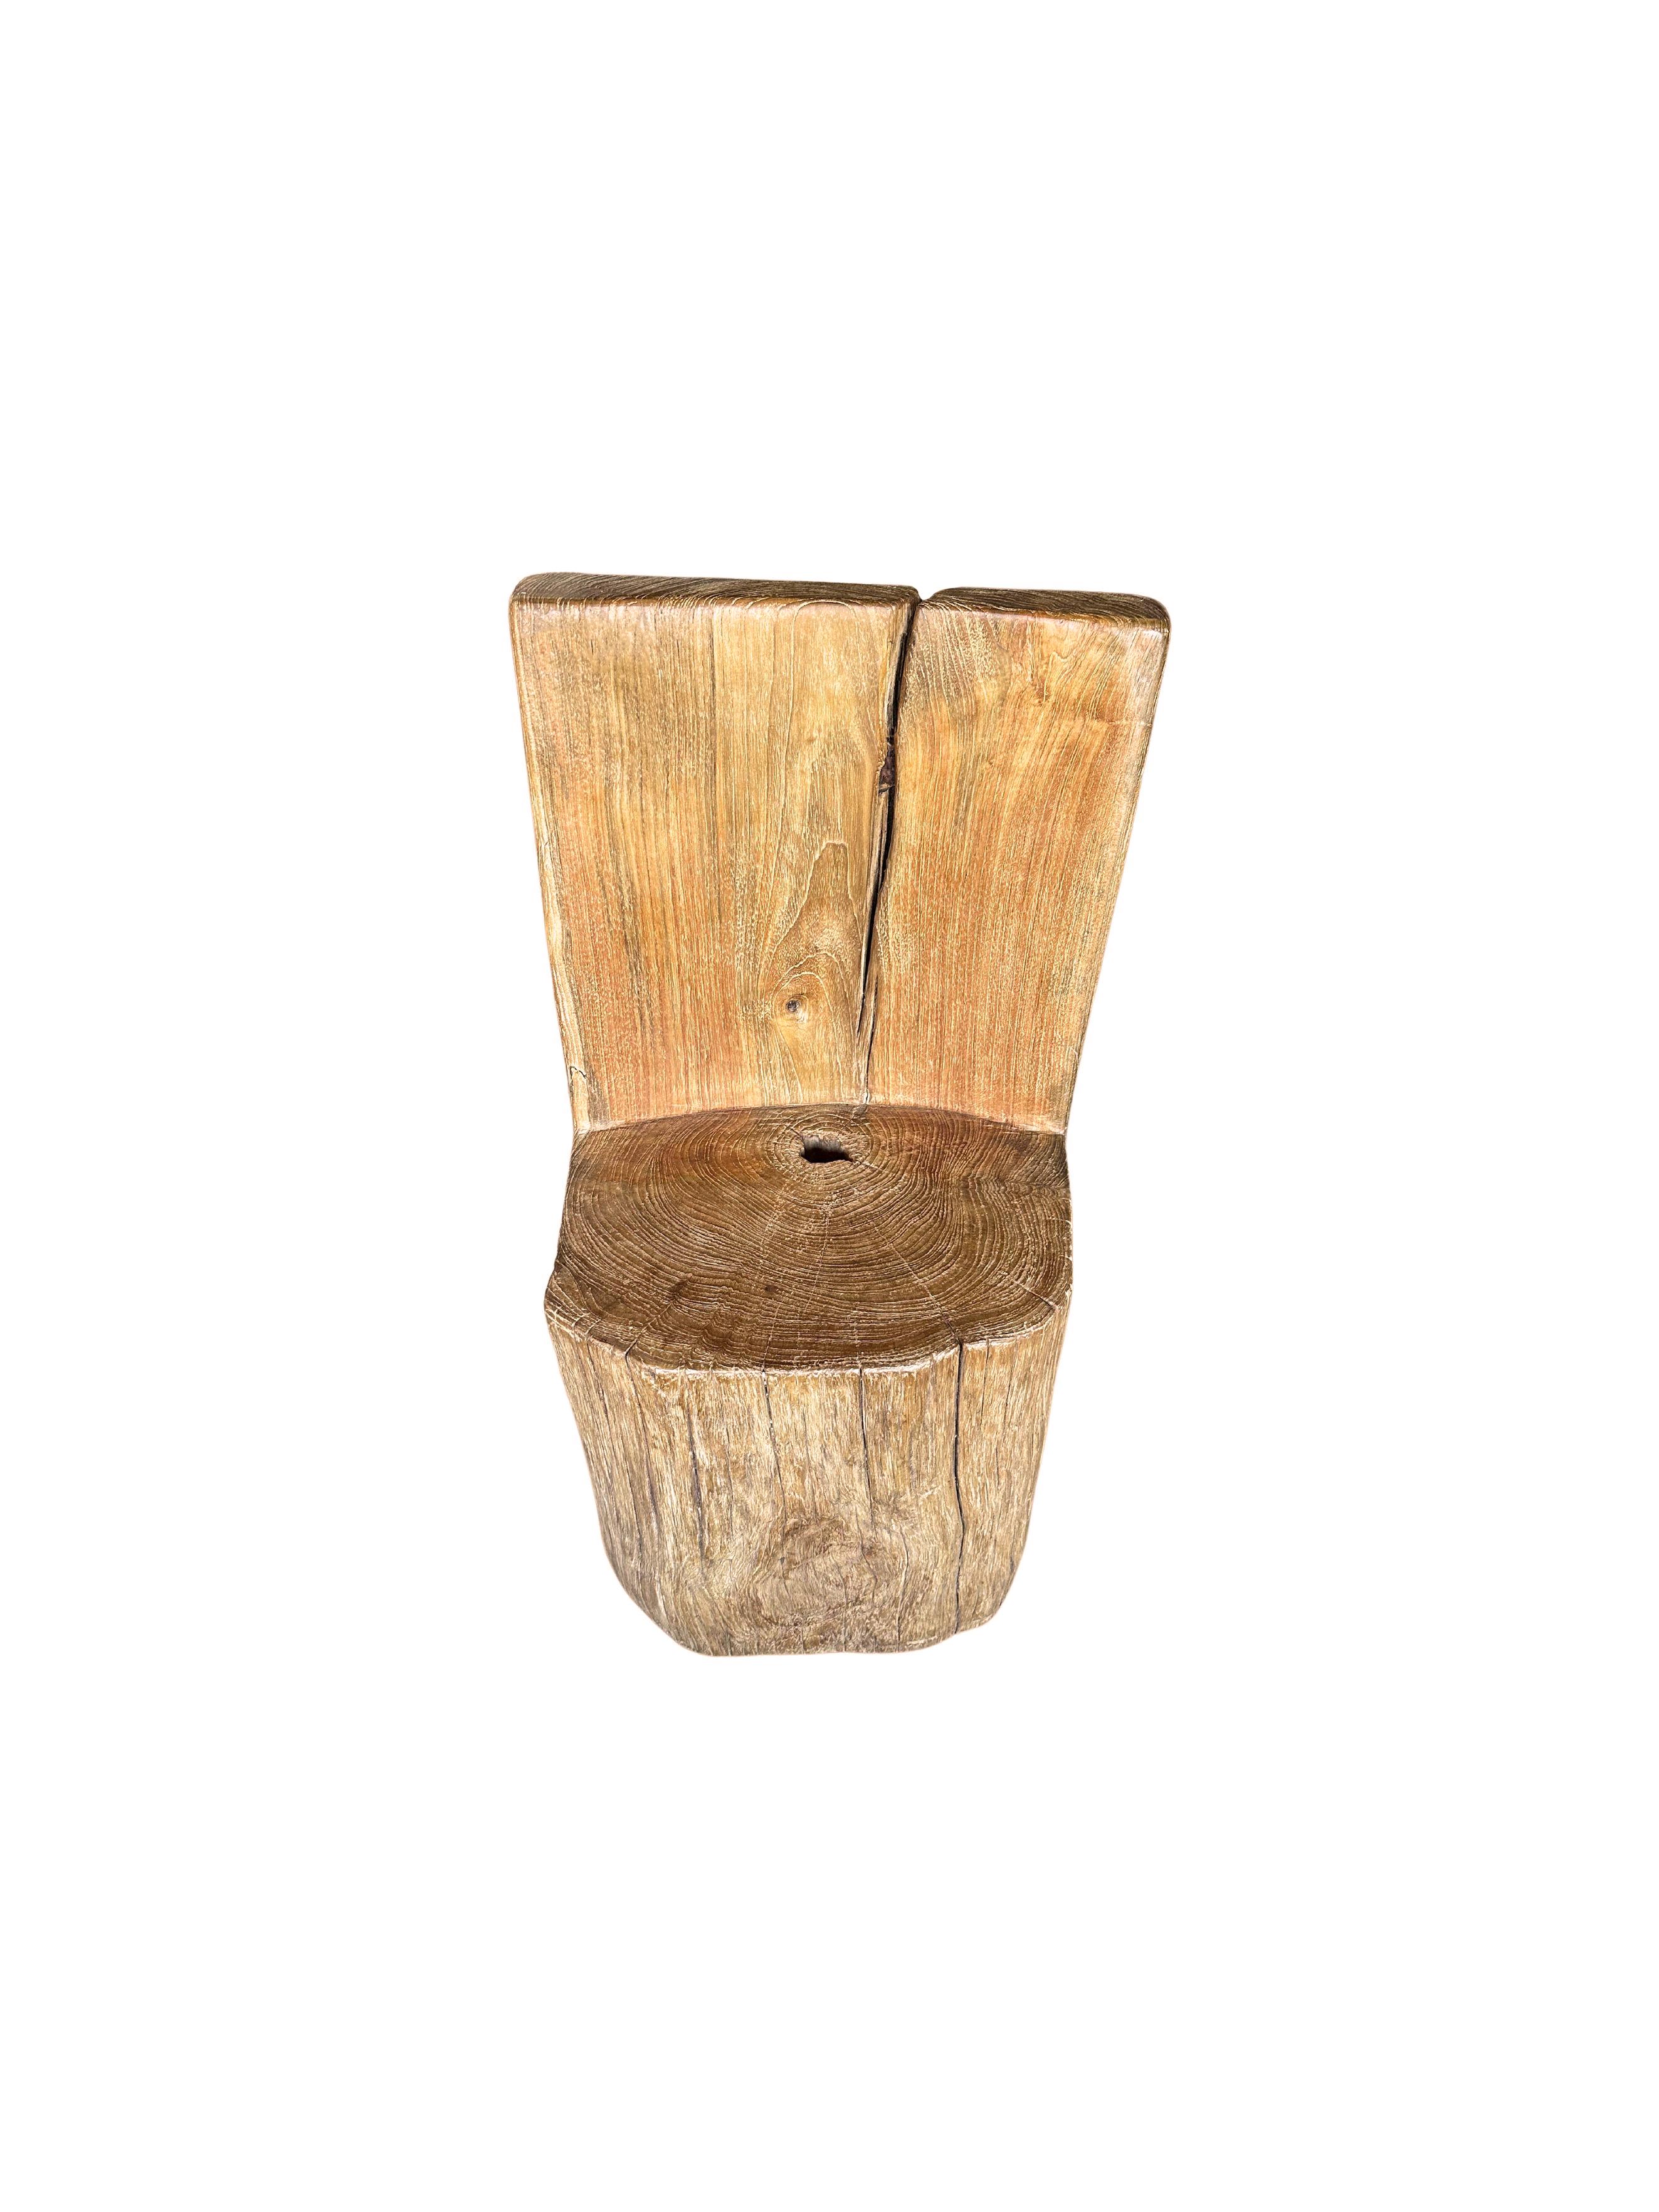 Sculptural Soild Teak Wood Chair In Good Condition For Sale In Jimbaran, Bali